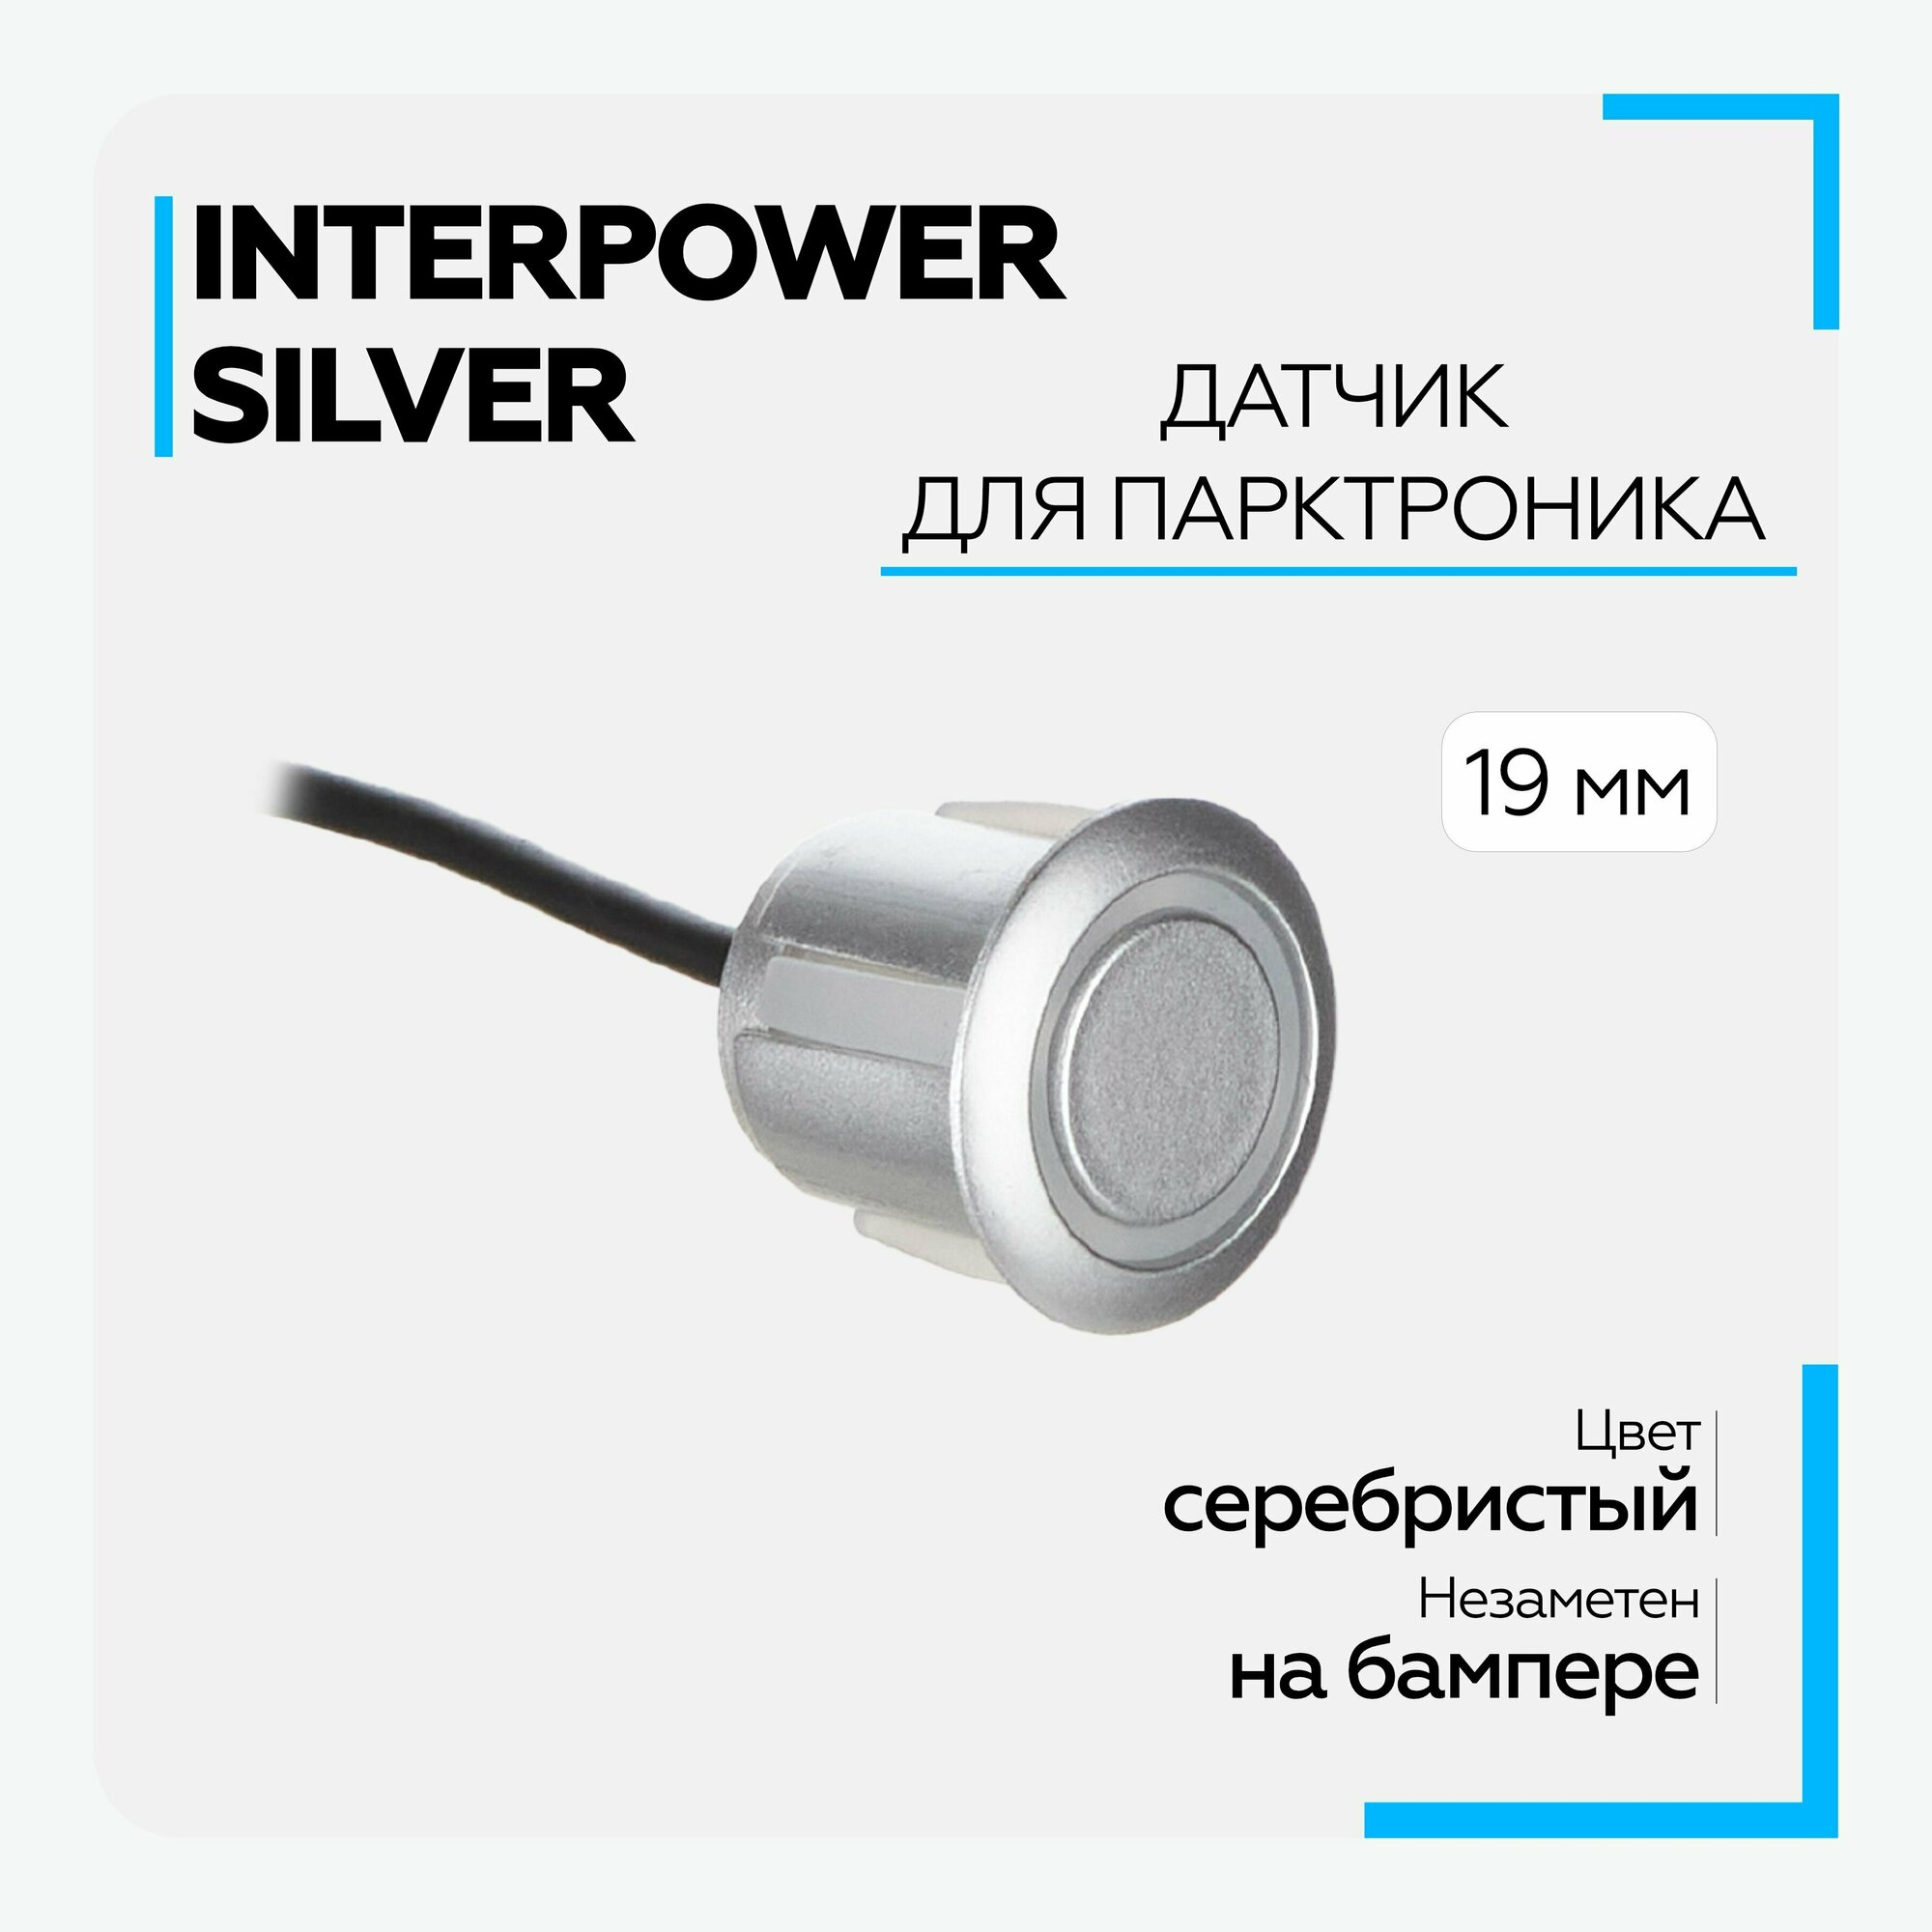 Датчик для парктроников Interpower 19мм Silver